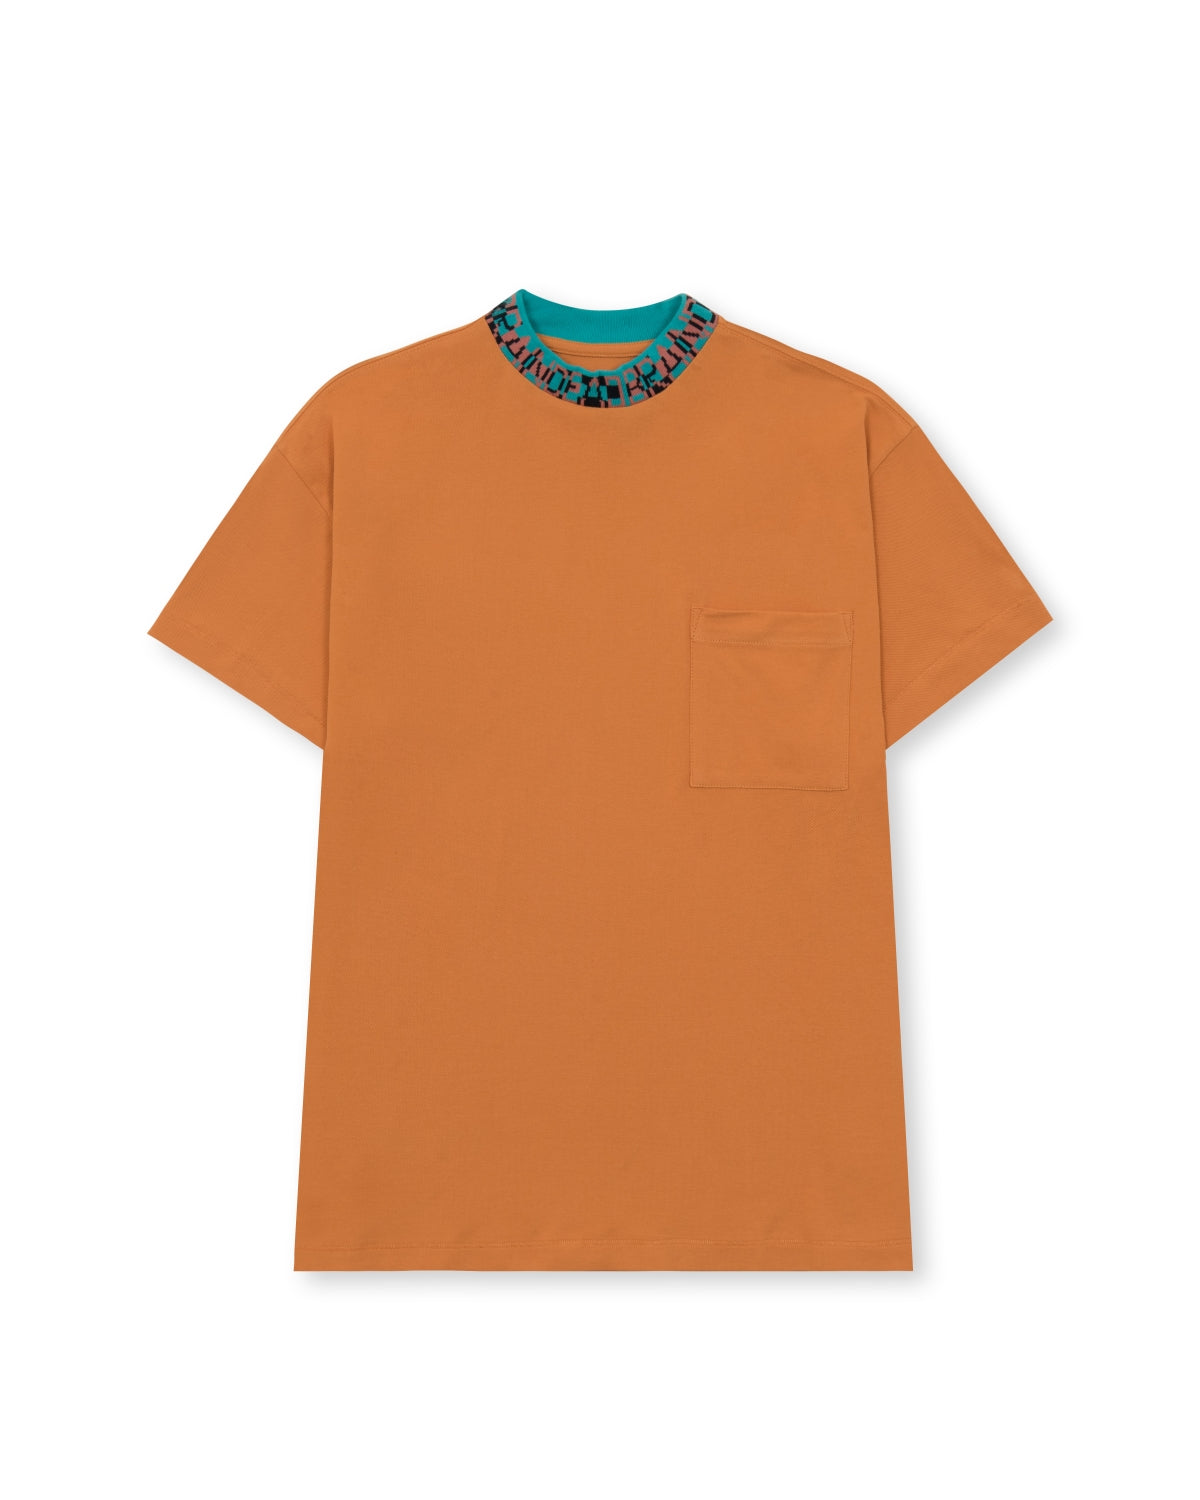 Jacquarded Collar Pique Mock Neck Shirt - Orange 1